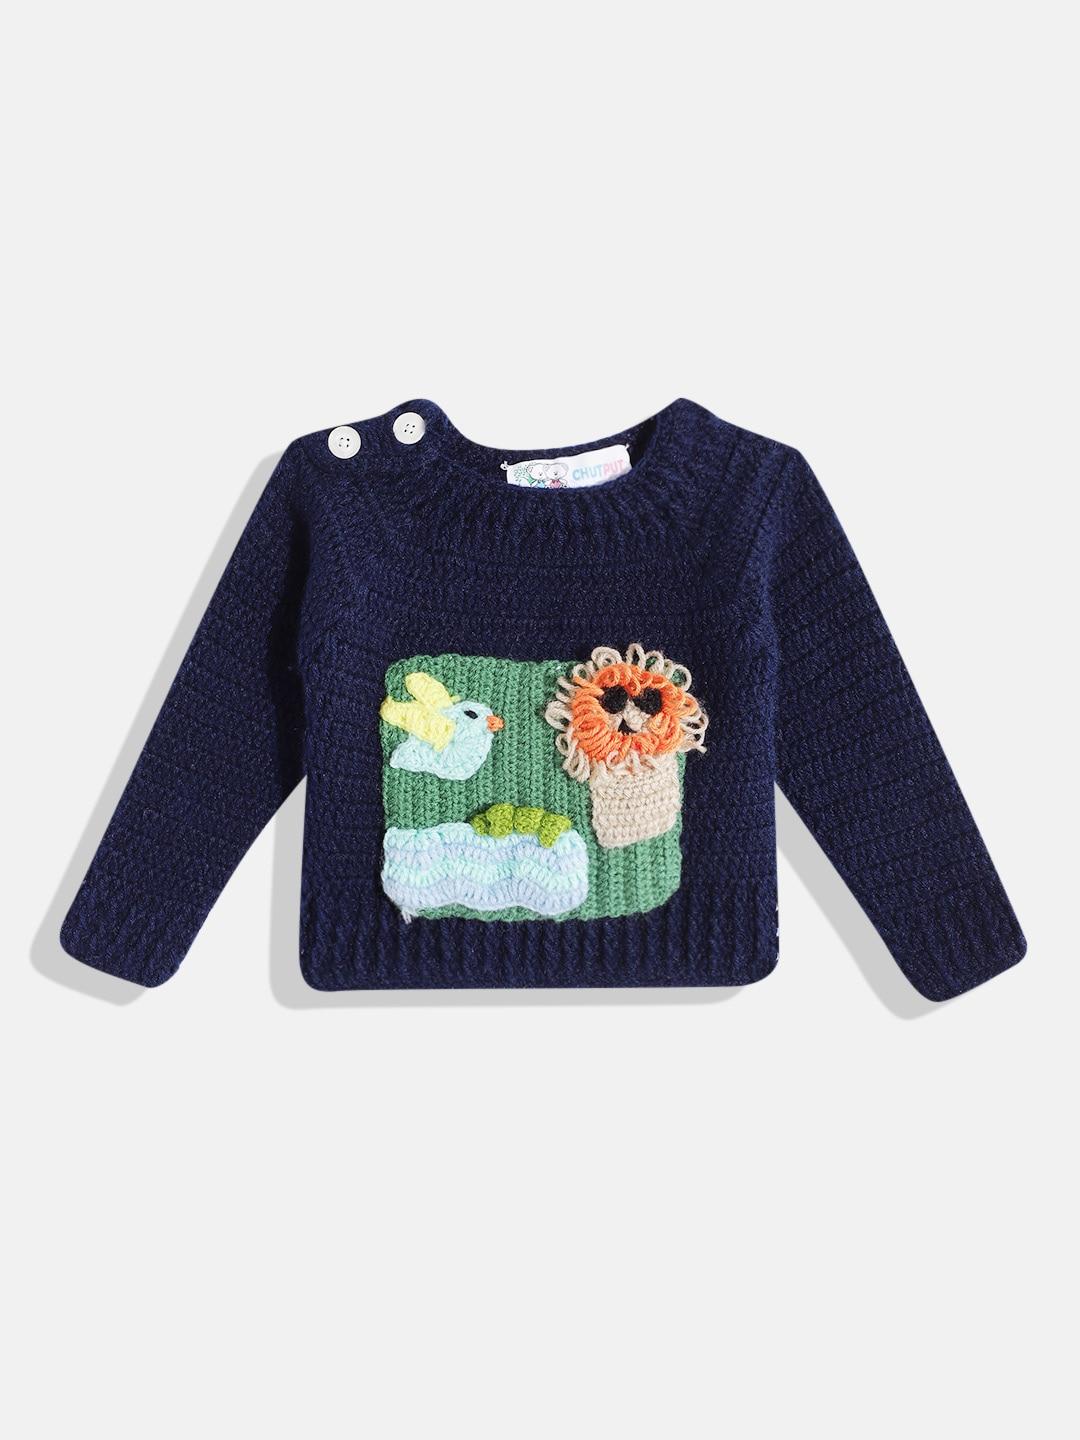 chutput-unisex-kids-woollen-pullover-with-embroidered-detail